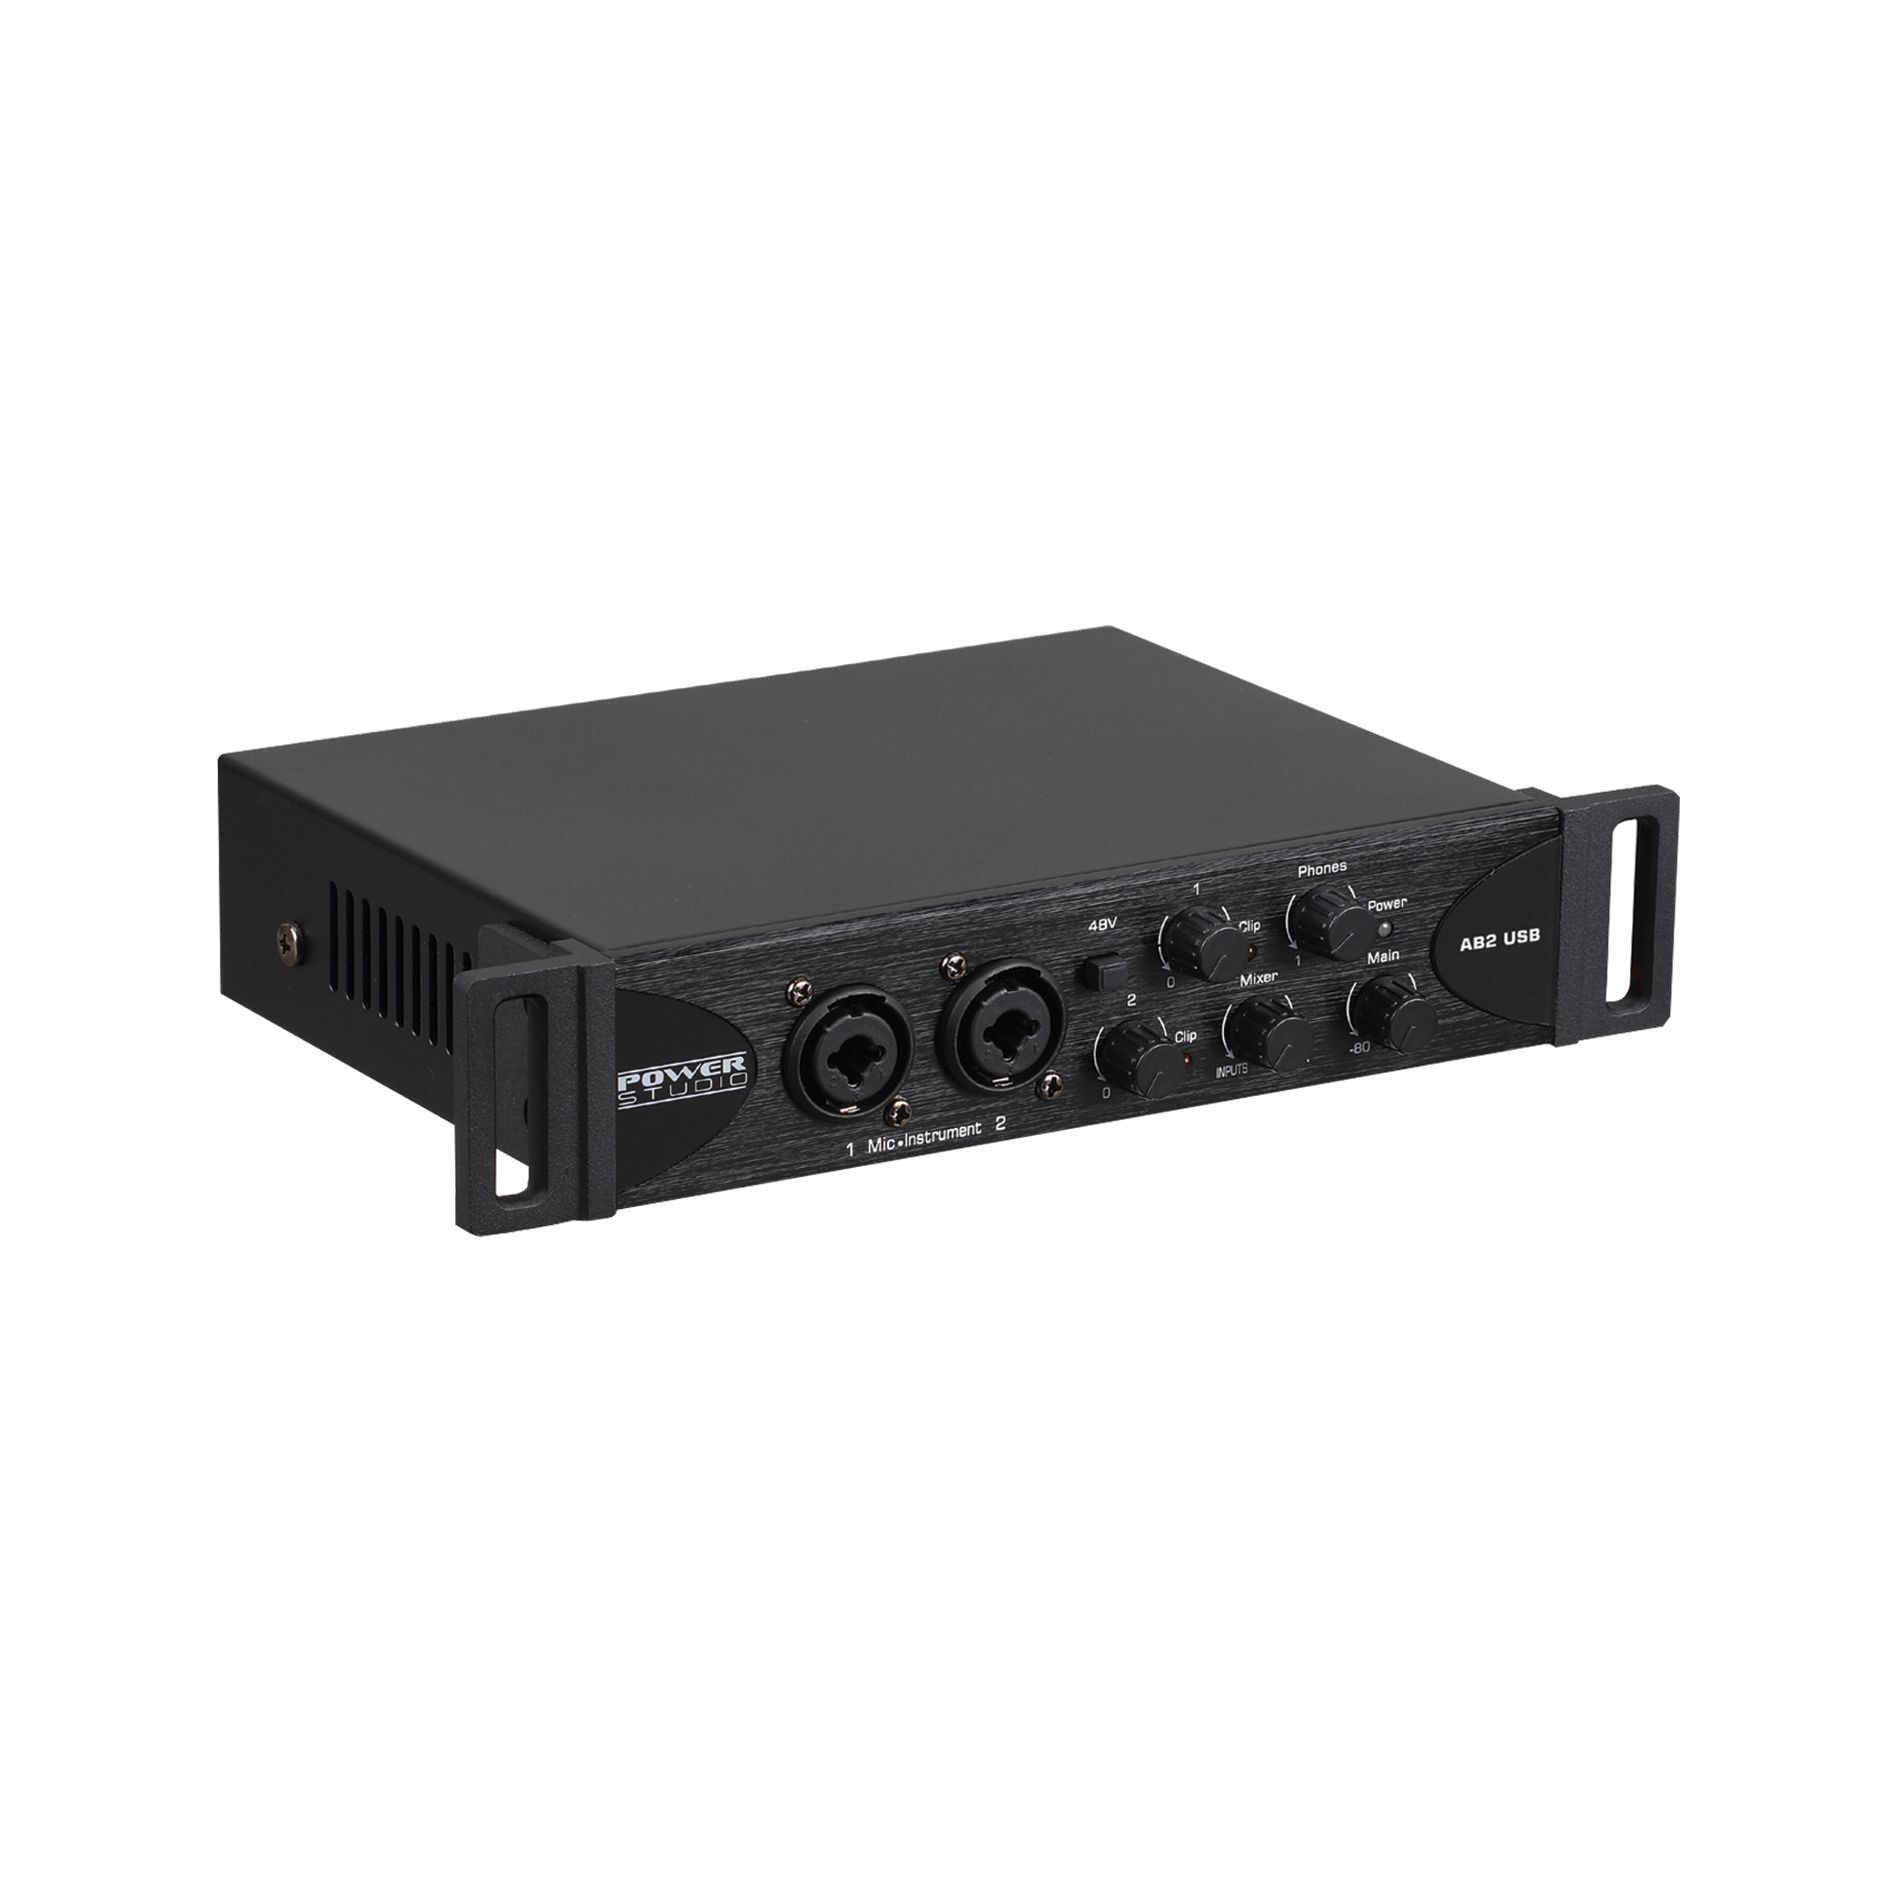 Power Studio Ab2 Usb - USB audio-interface - Variation 2